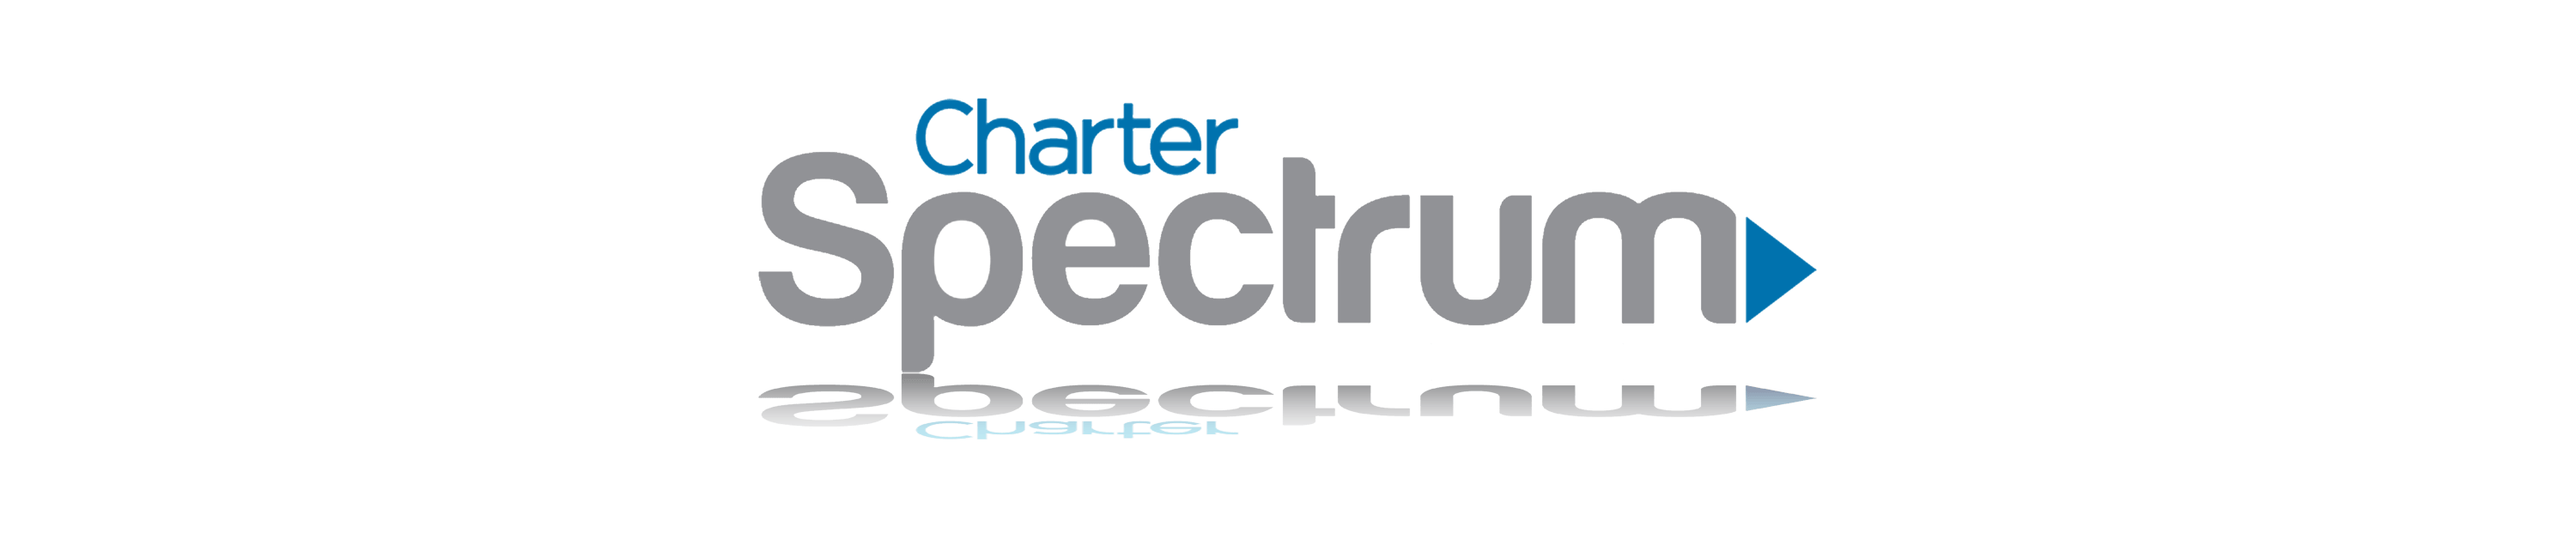 Spectrum TV Logo - Charter spectrum Logos